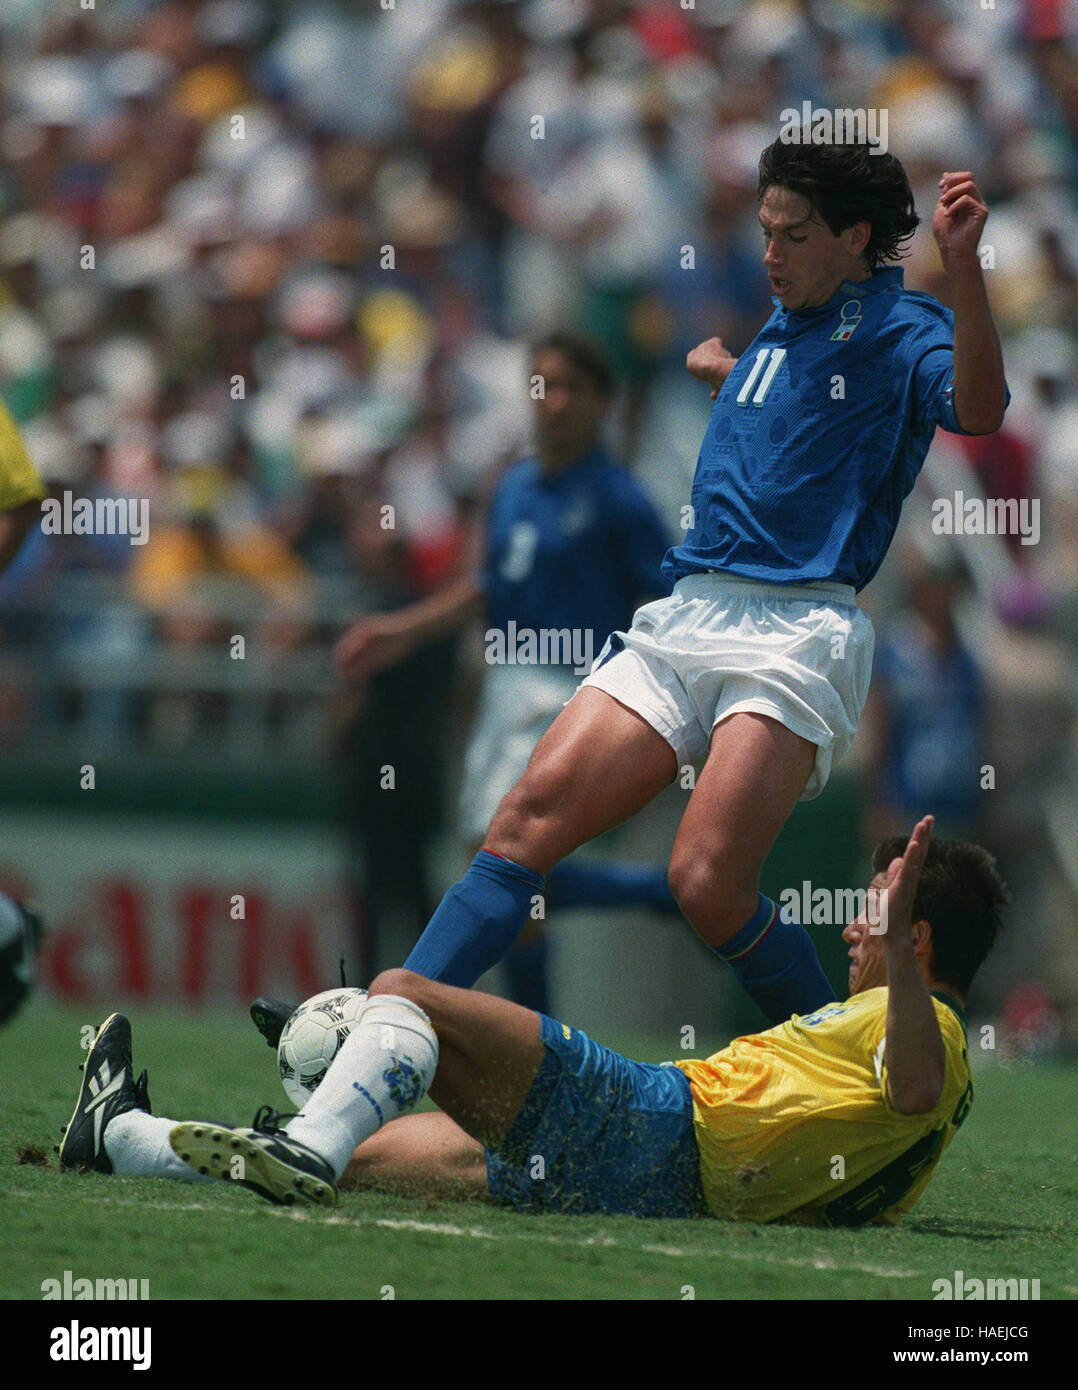 DUNGA TACKLES ALBERTINI WORLD CUP FINAL BRAZIL V ITALY 17 July 1994 Stock Photo